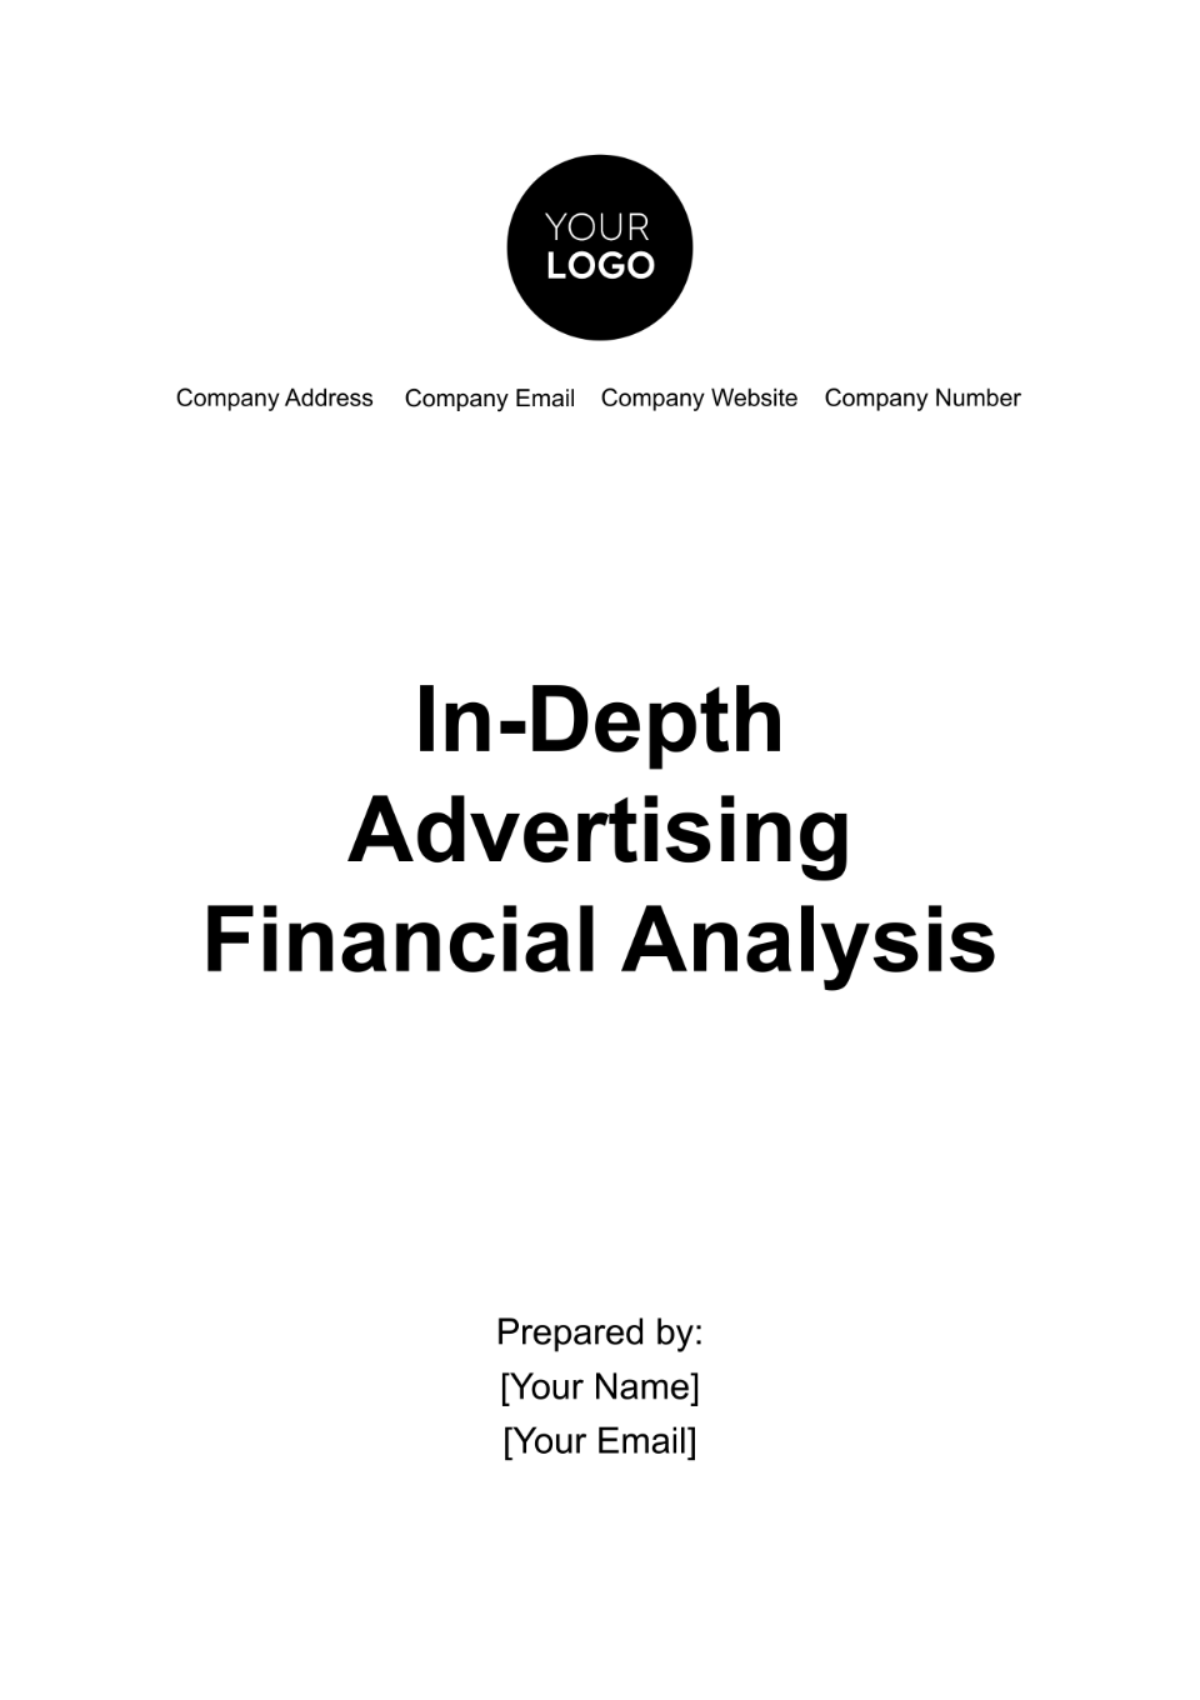 In-Depth Advertising Financial Analysis Template